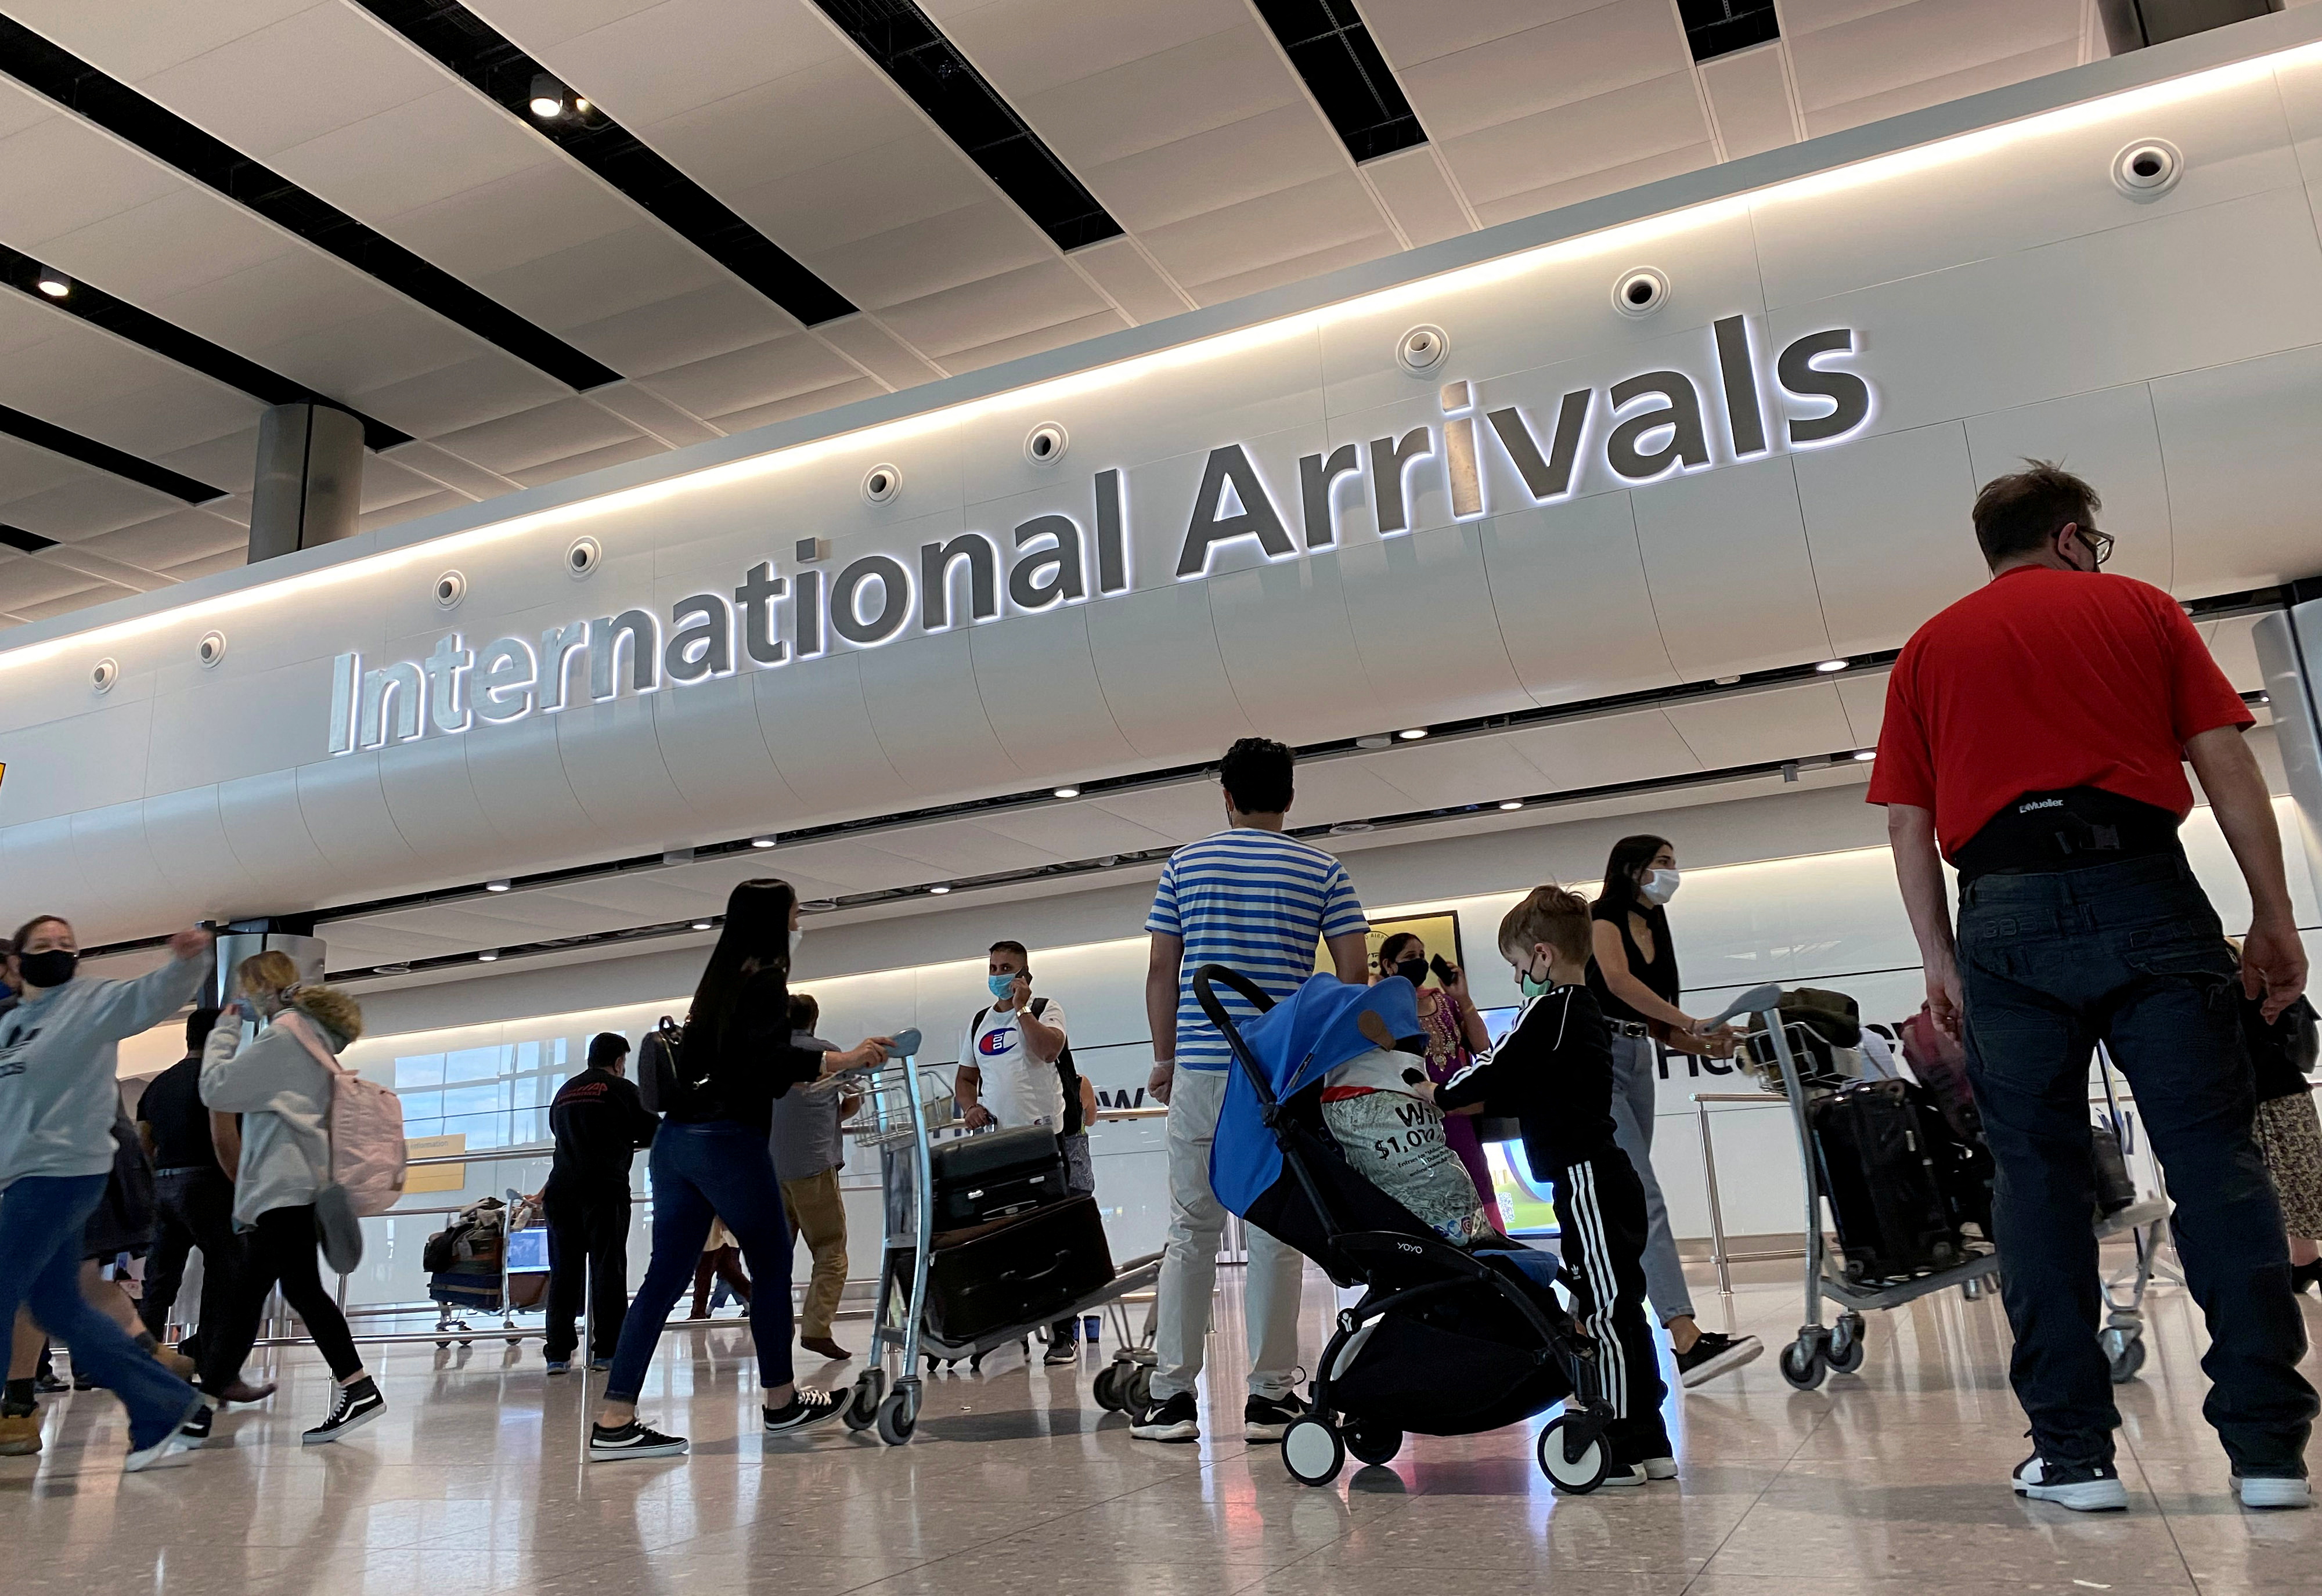 FILE PHOTO: Passengers from international flights arrive at Heathrow Airport, following the outbreak of the coronavirus disease (COVID-19), London, Britain